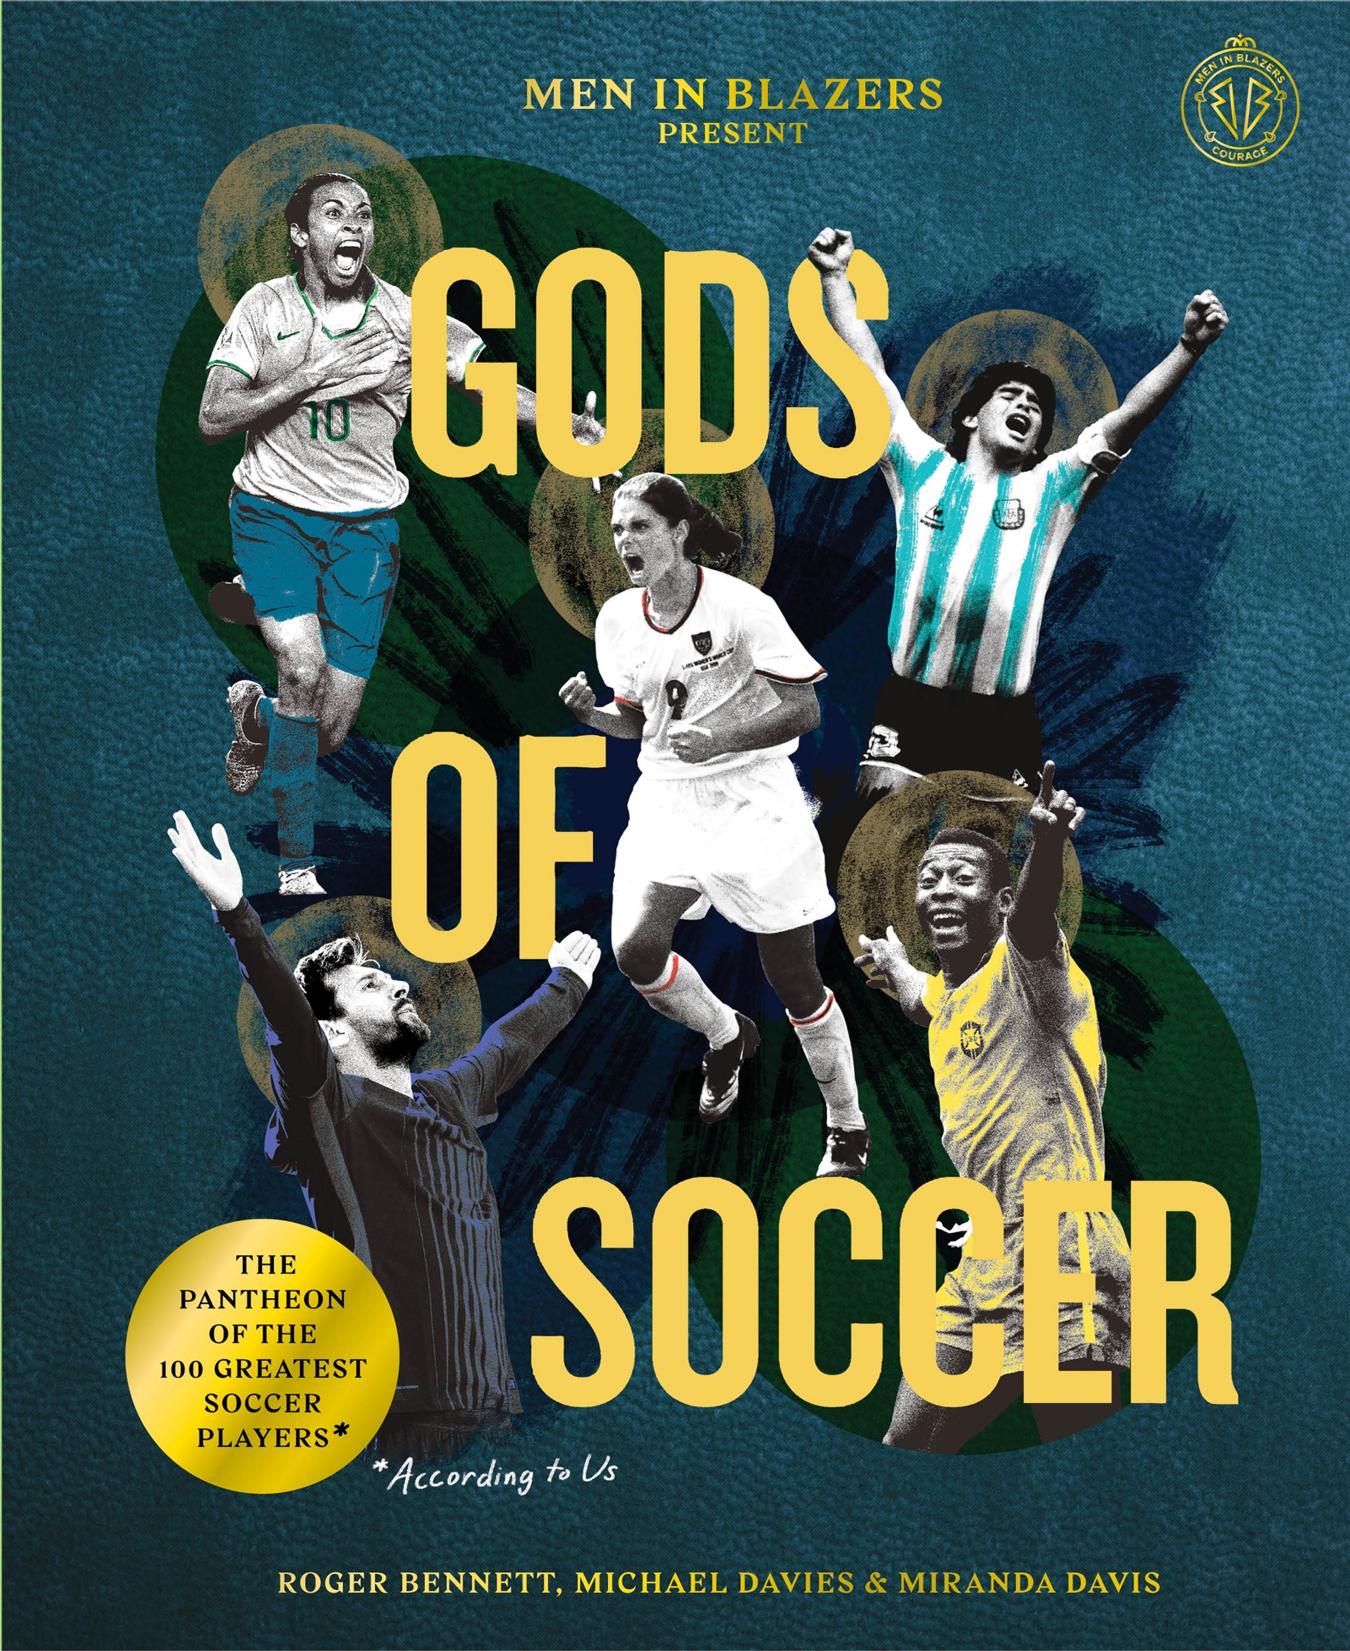 Gods of Soccer by Roger Bennet et al